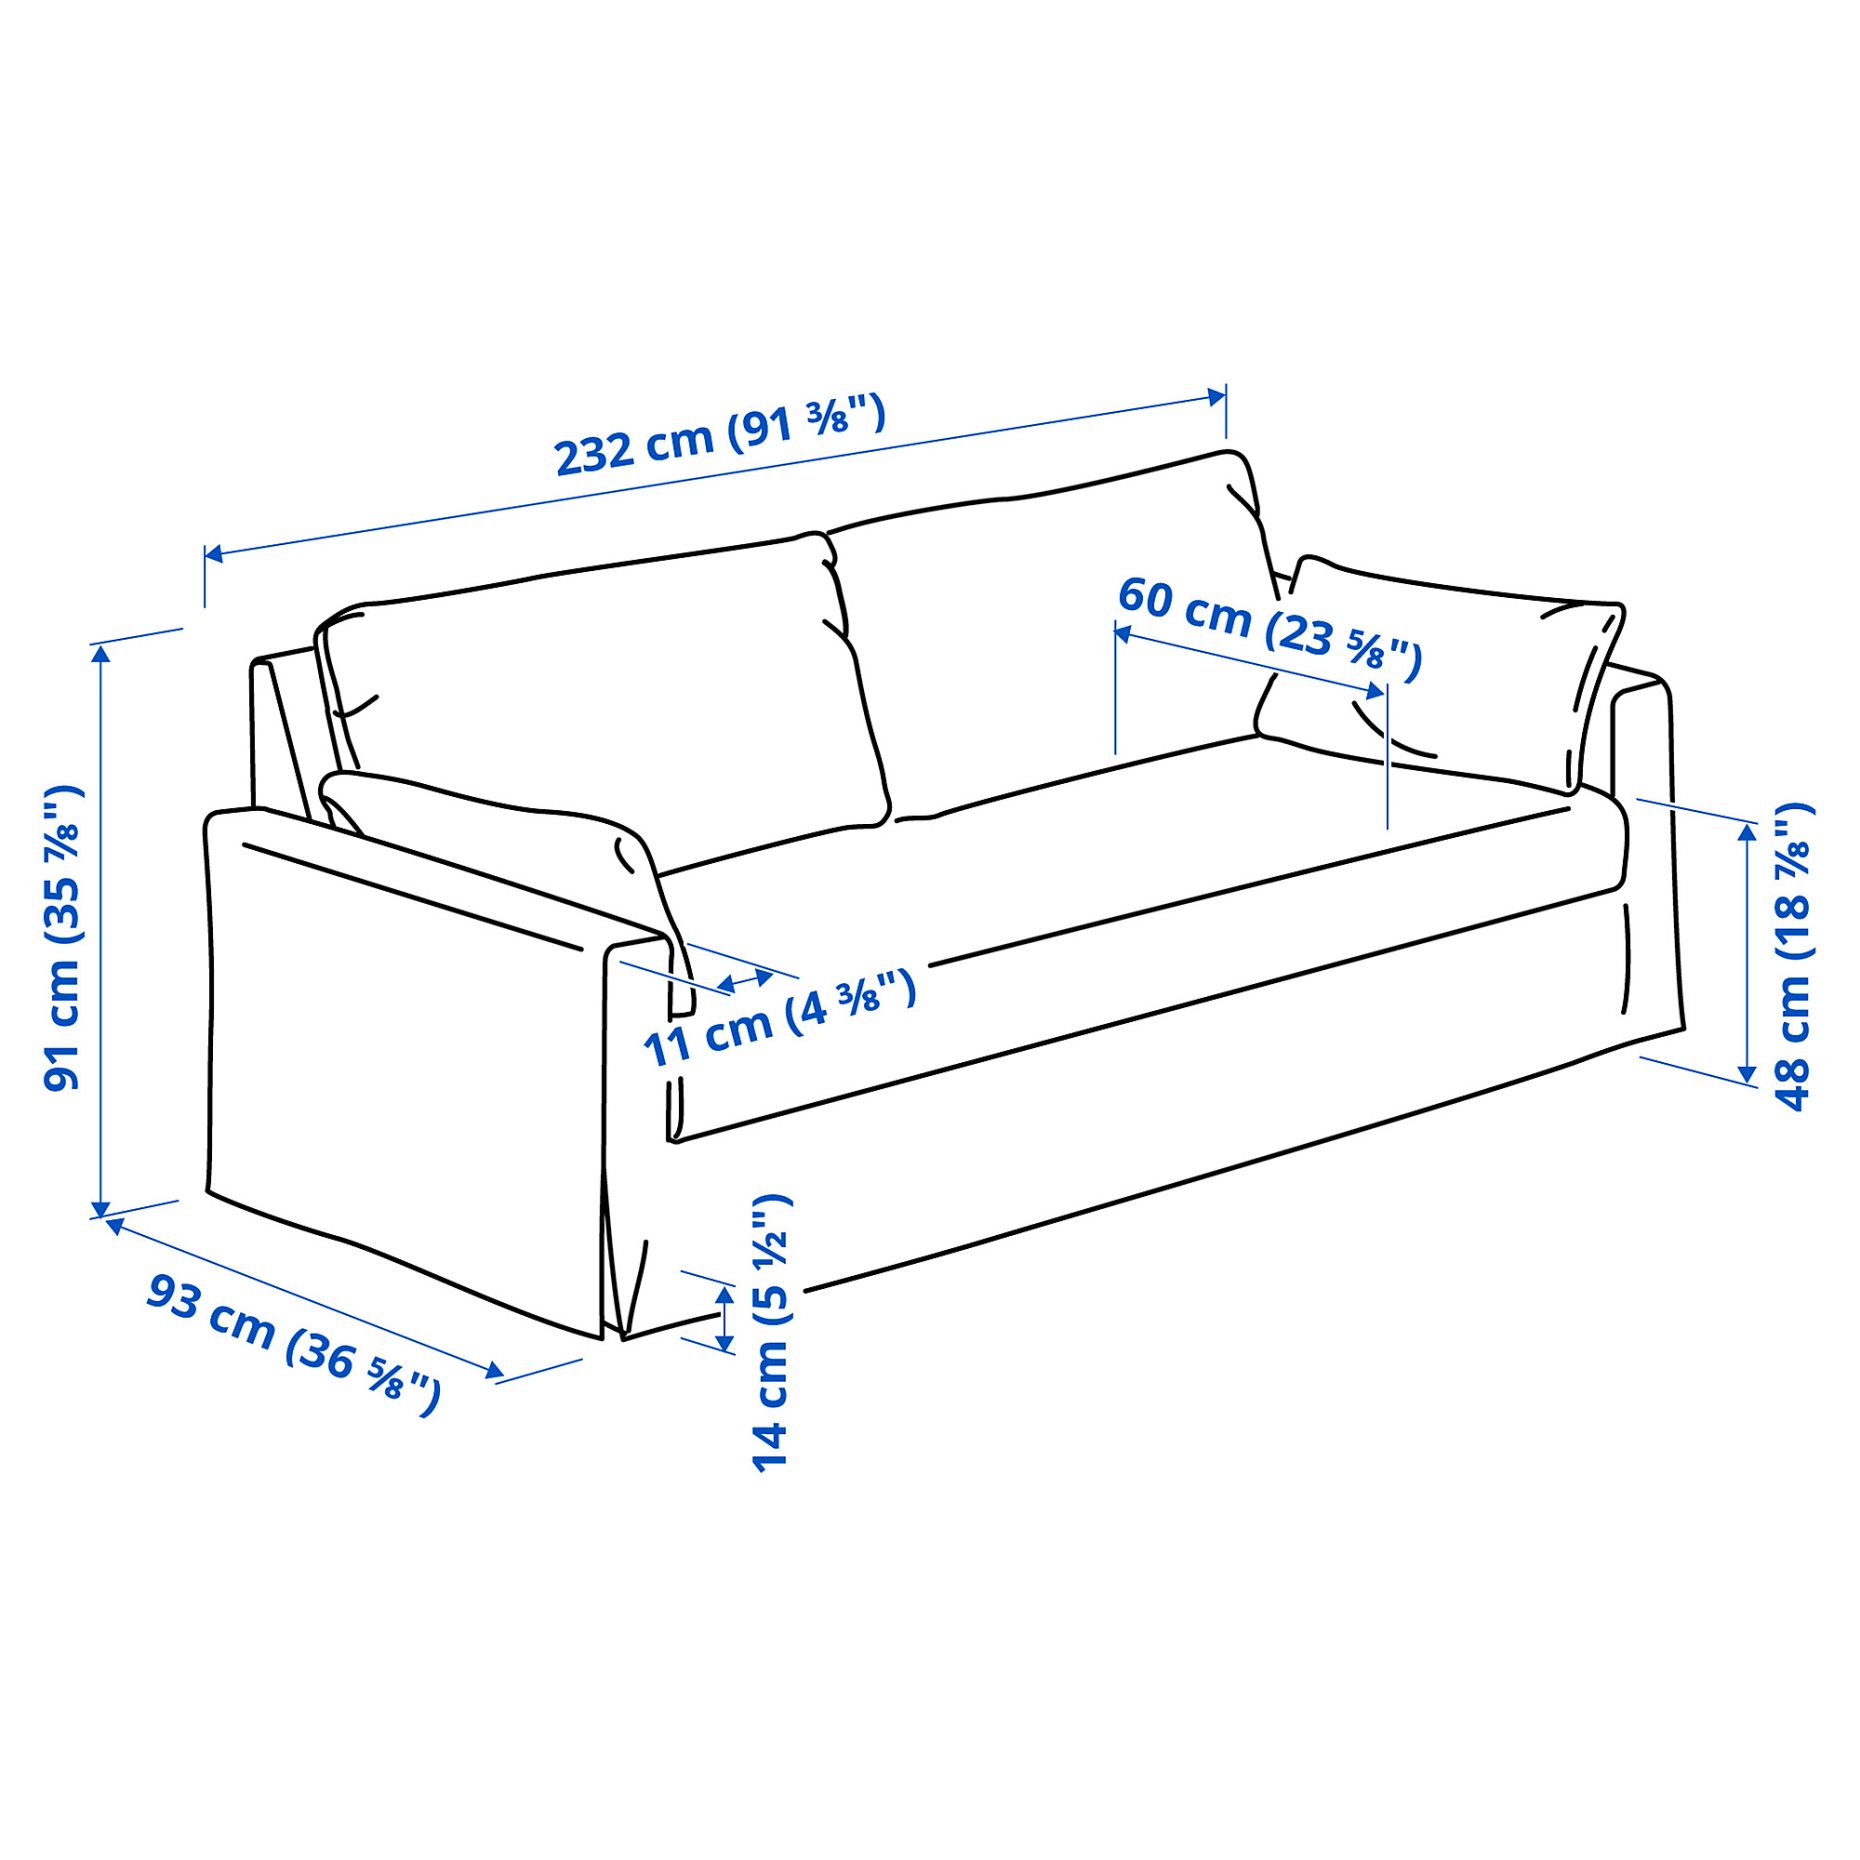 HYLTARP, 3-seat sofa, 194.896.46